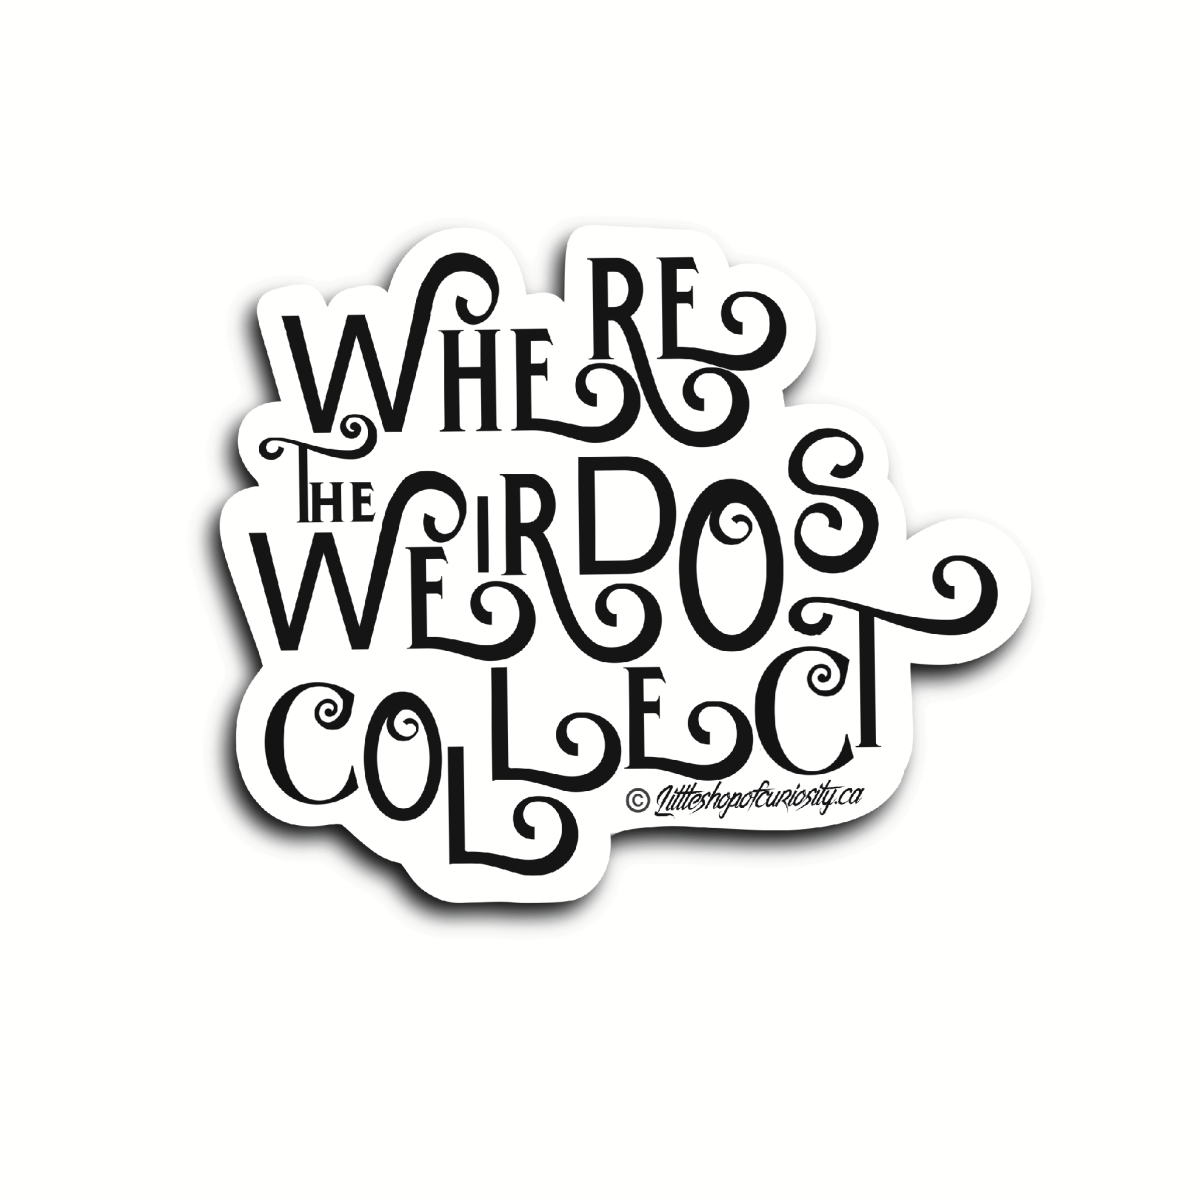 Where The Weirdos Collect Sticker - Black & White Sticker - Little Shop of Curiosity